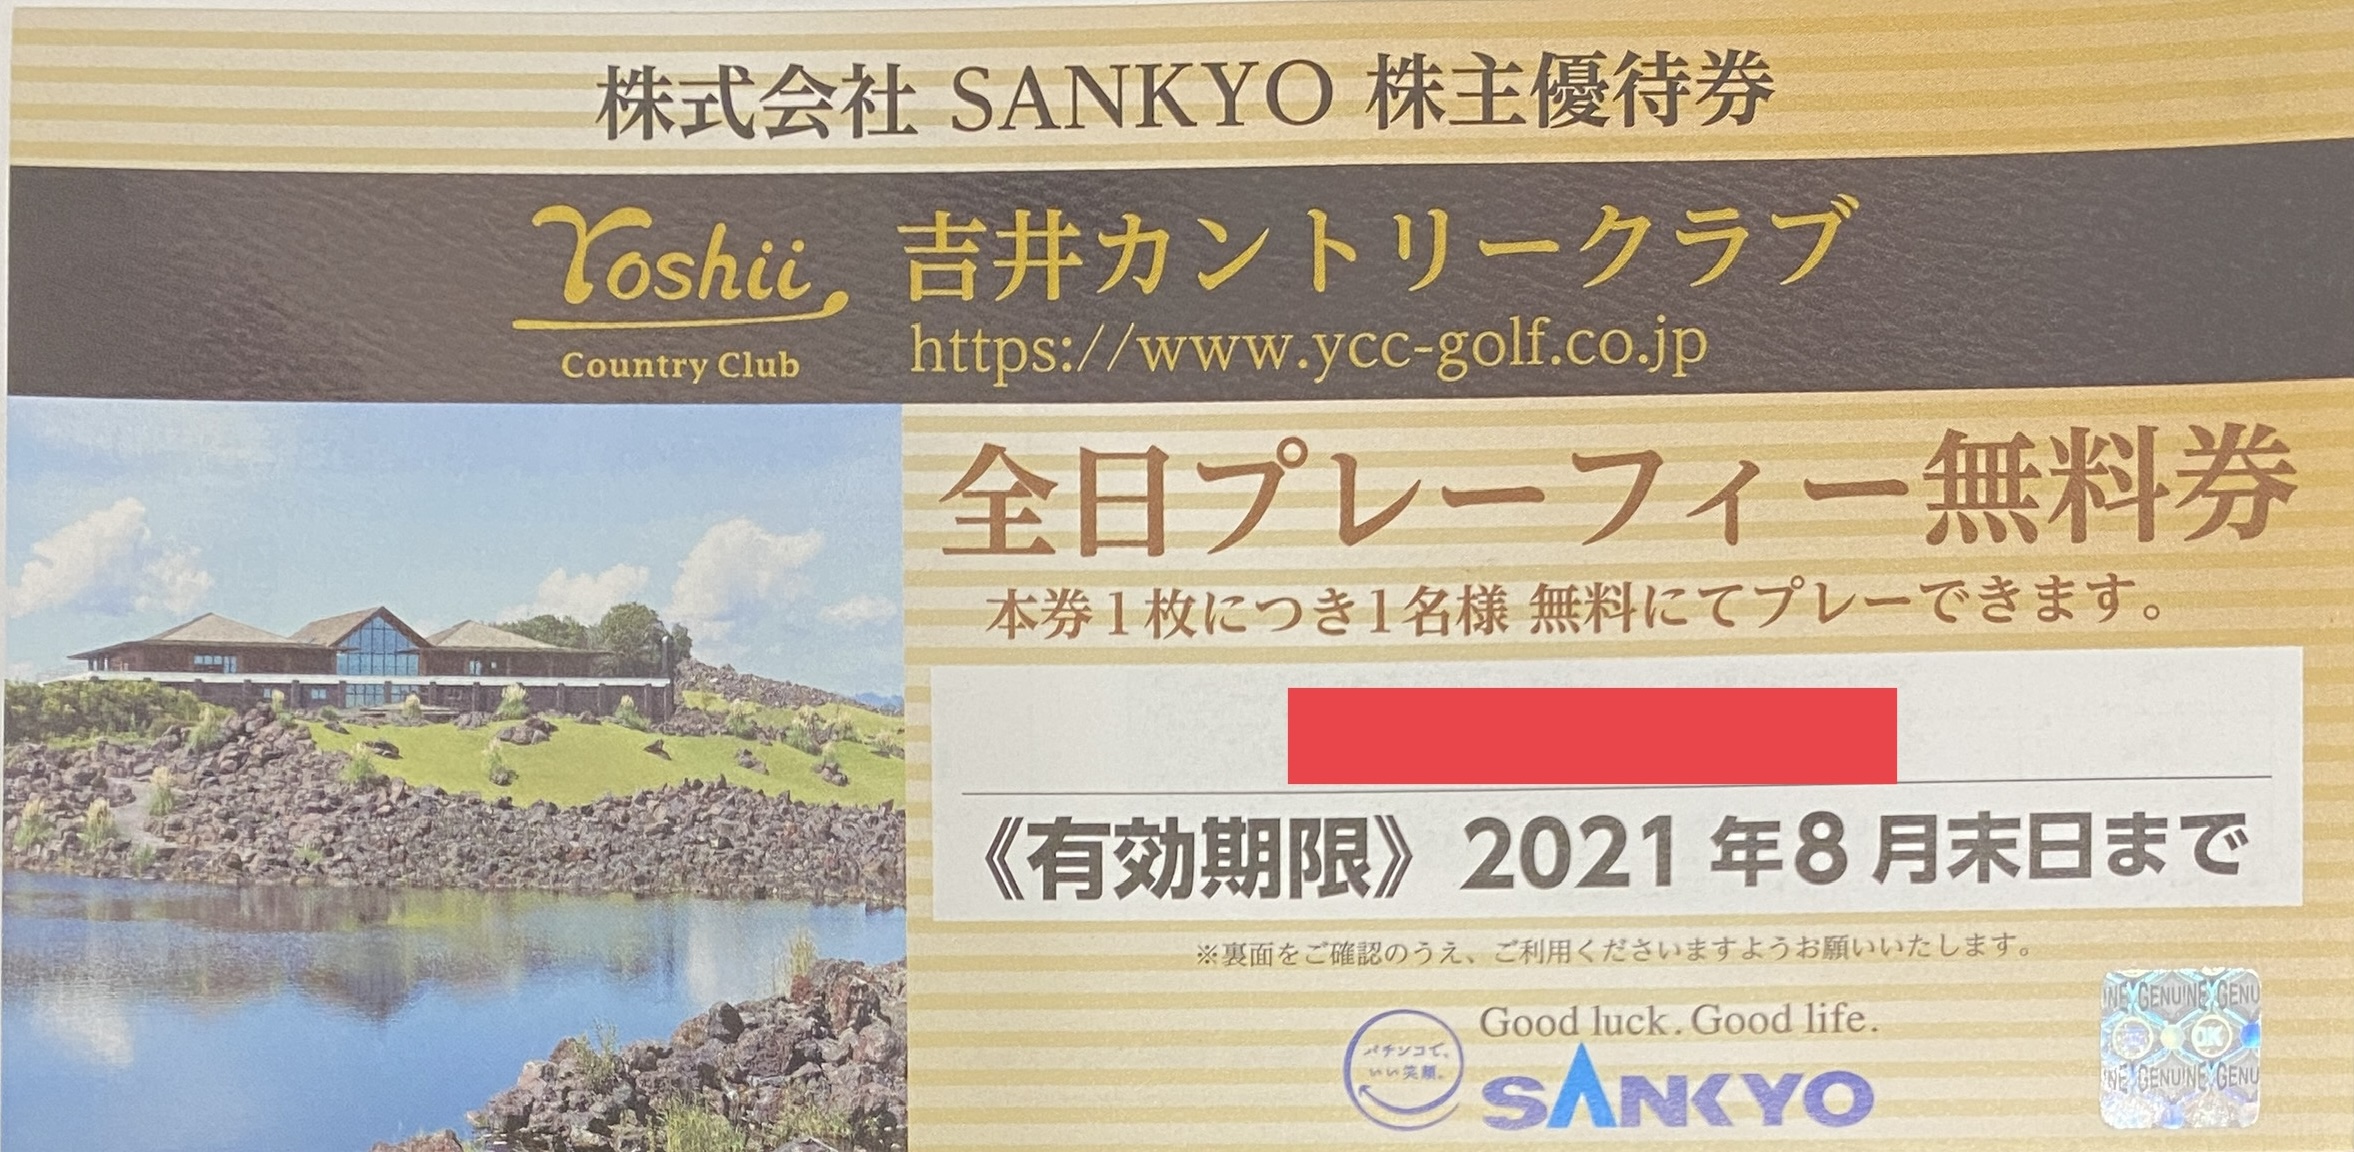 SANKYO - SANKYO株主優待 吉井カントリークラブ全日プレーフィー無料券